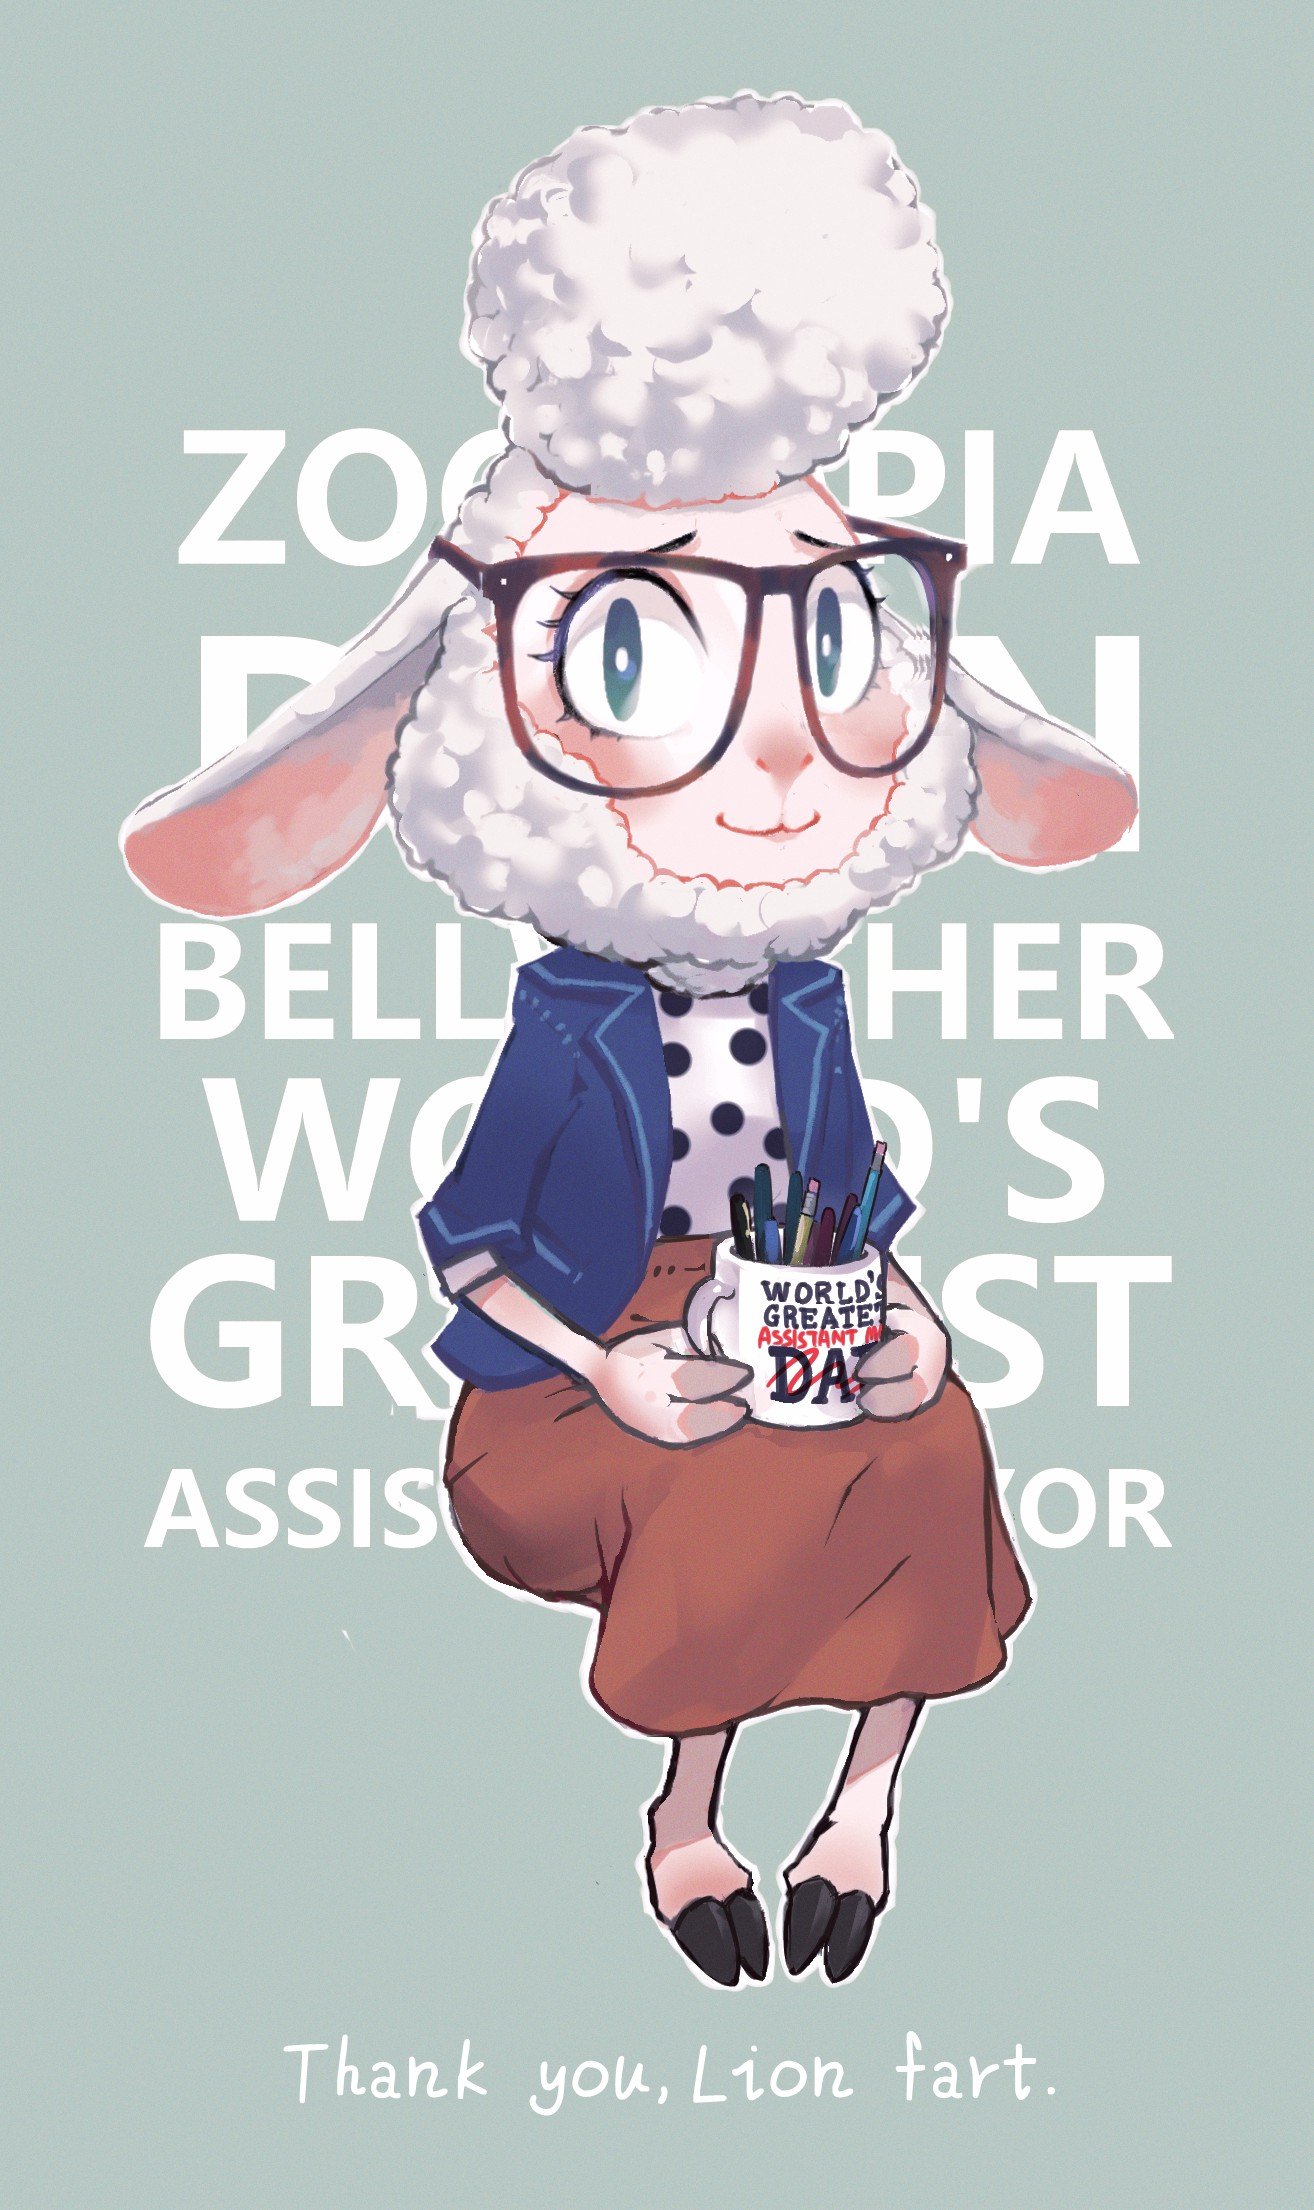 weirdest zootopia fanart sheep teacher